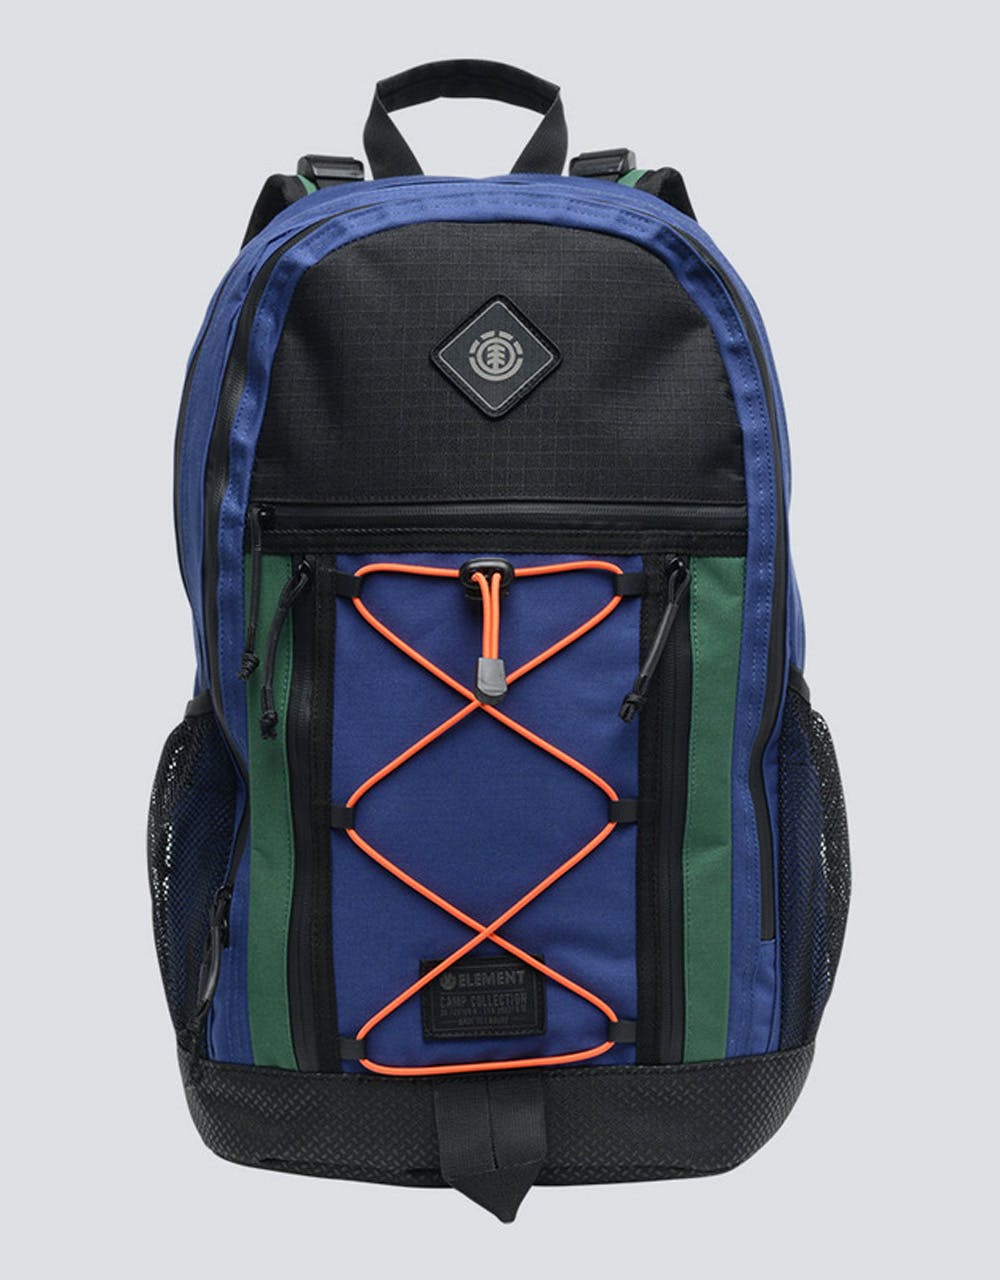 Element Cypress Outward Backpack - Naval Blue